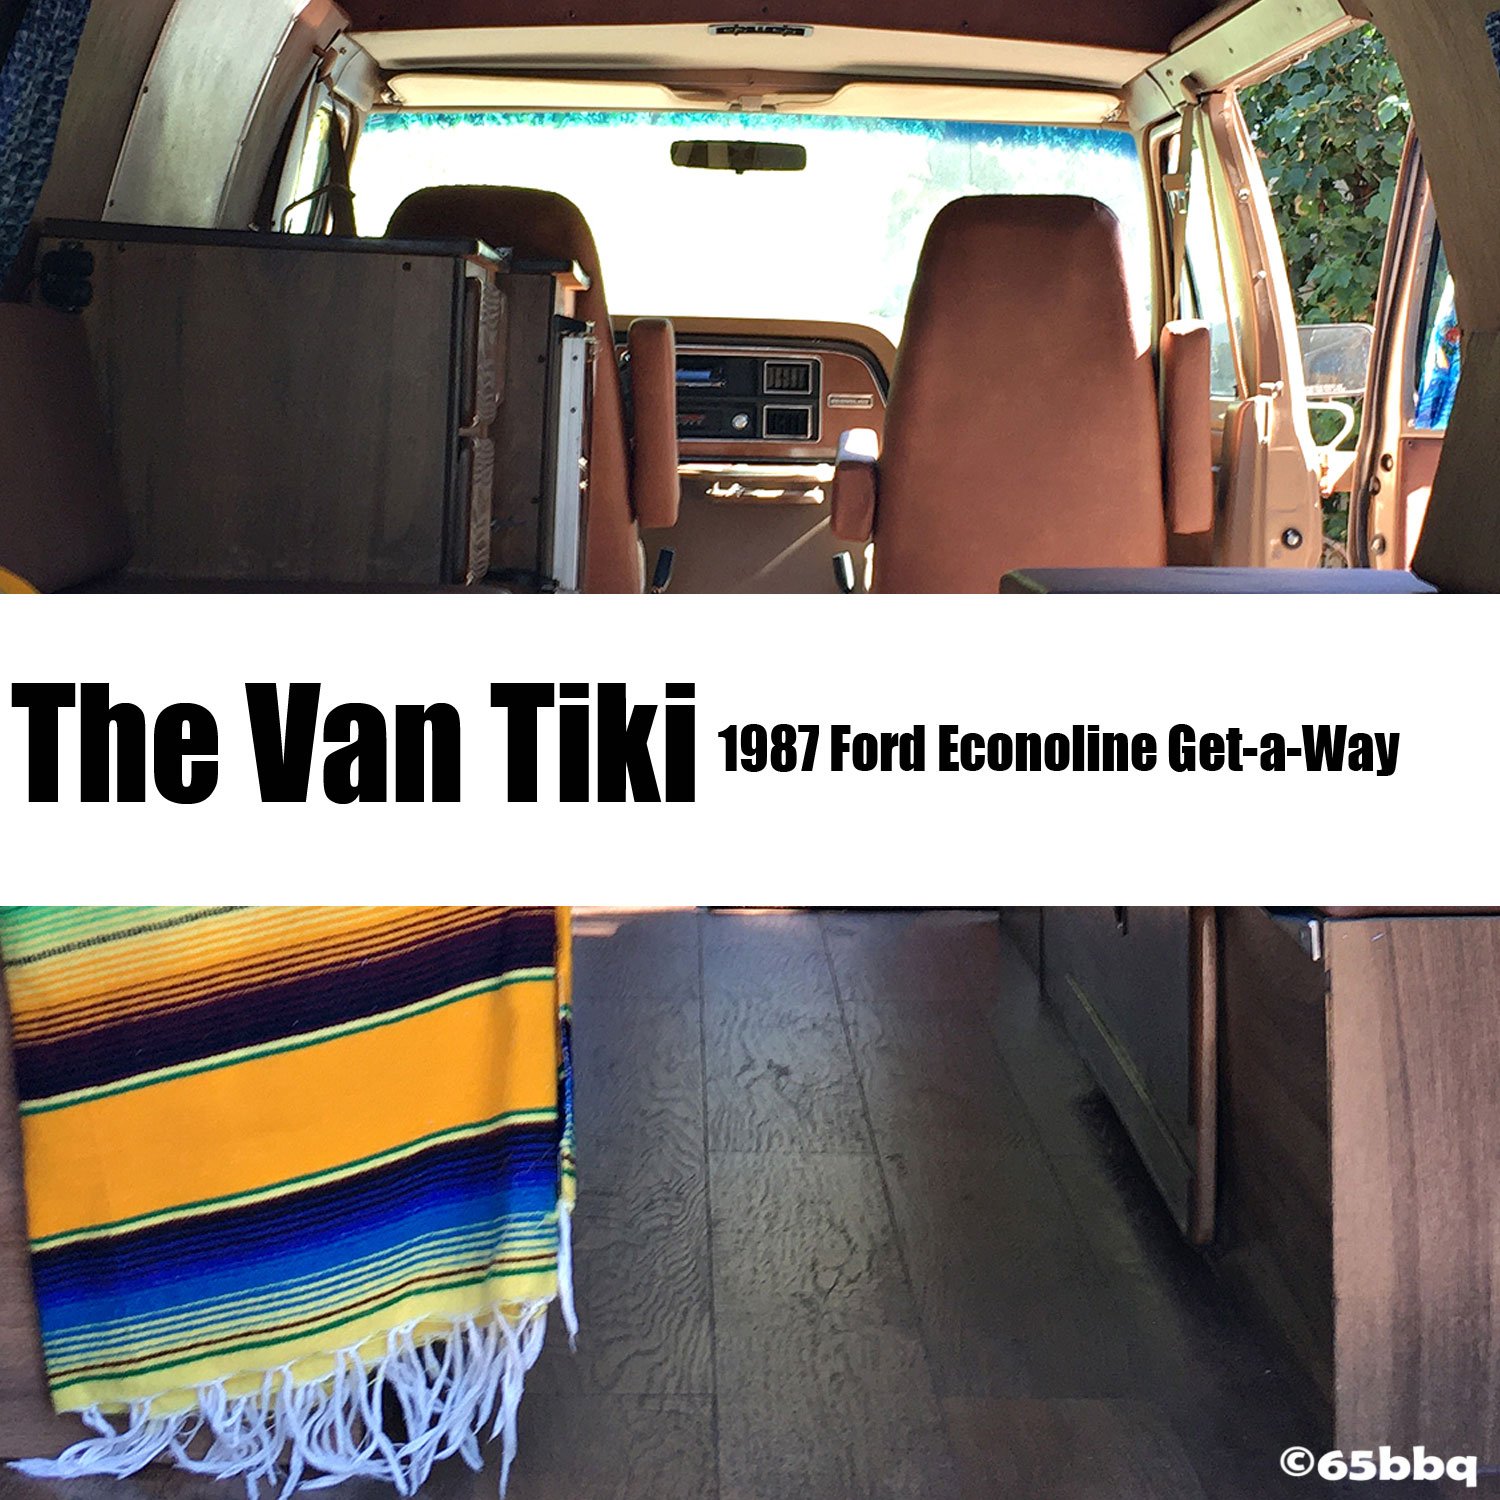 The Van Tiki